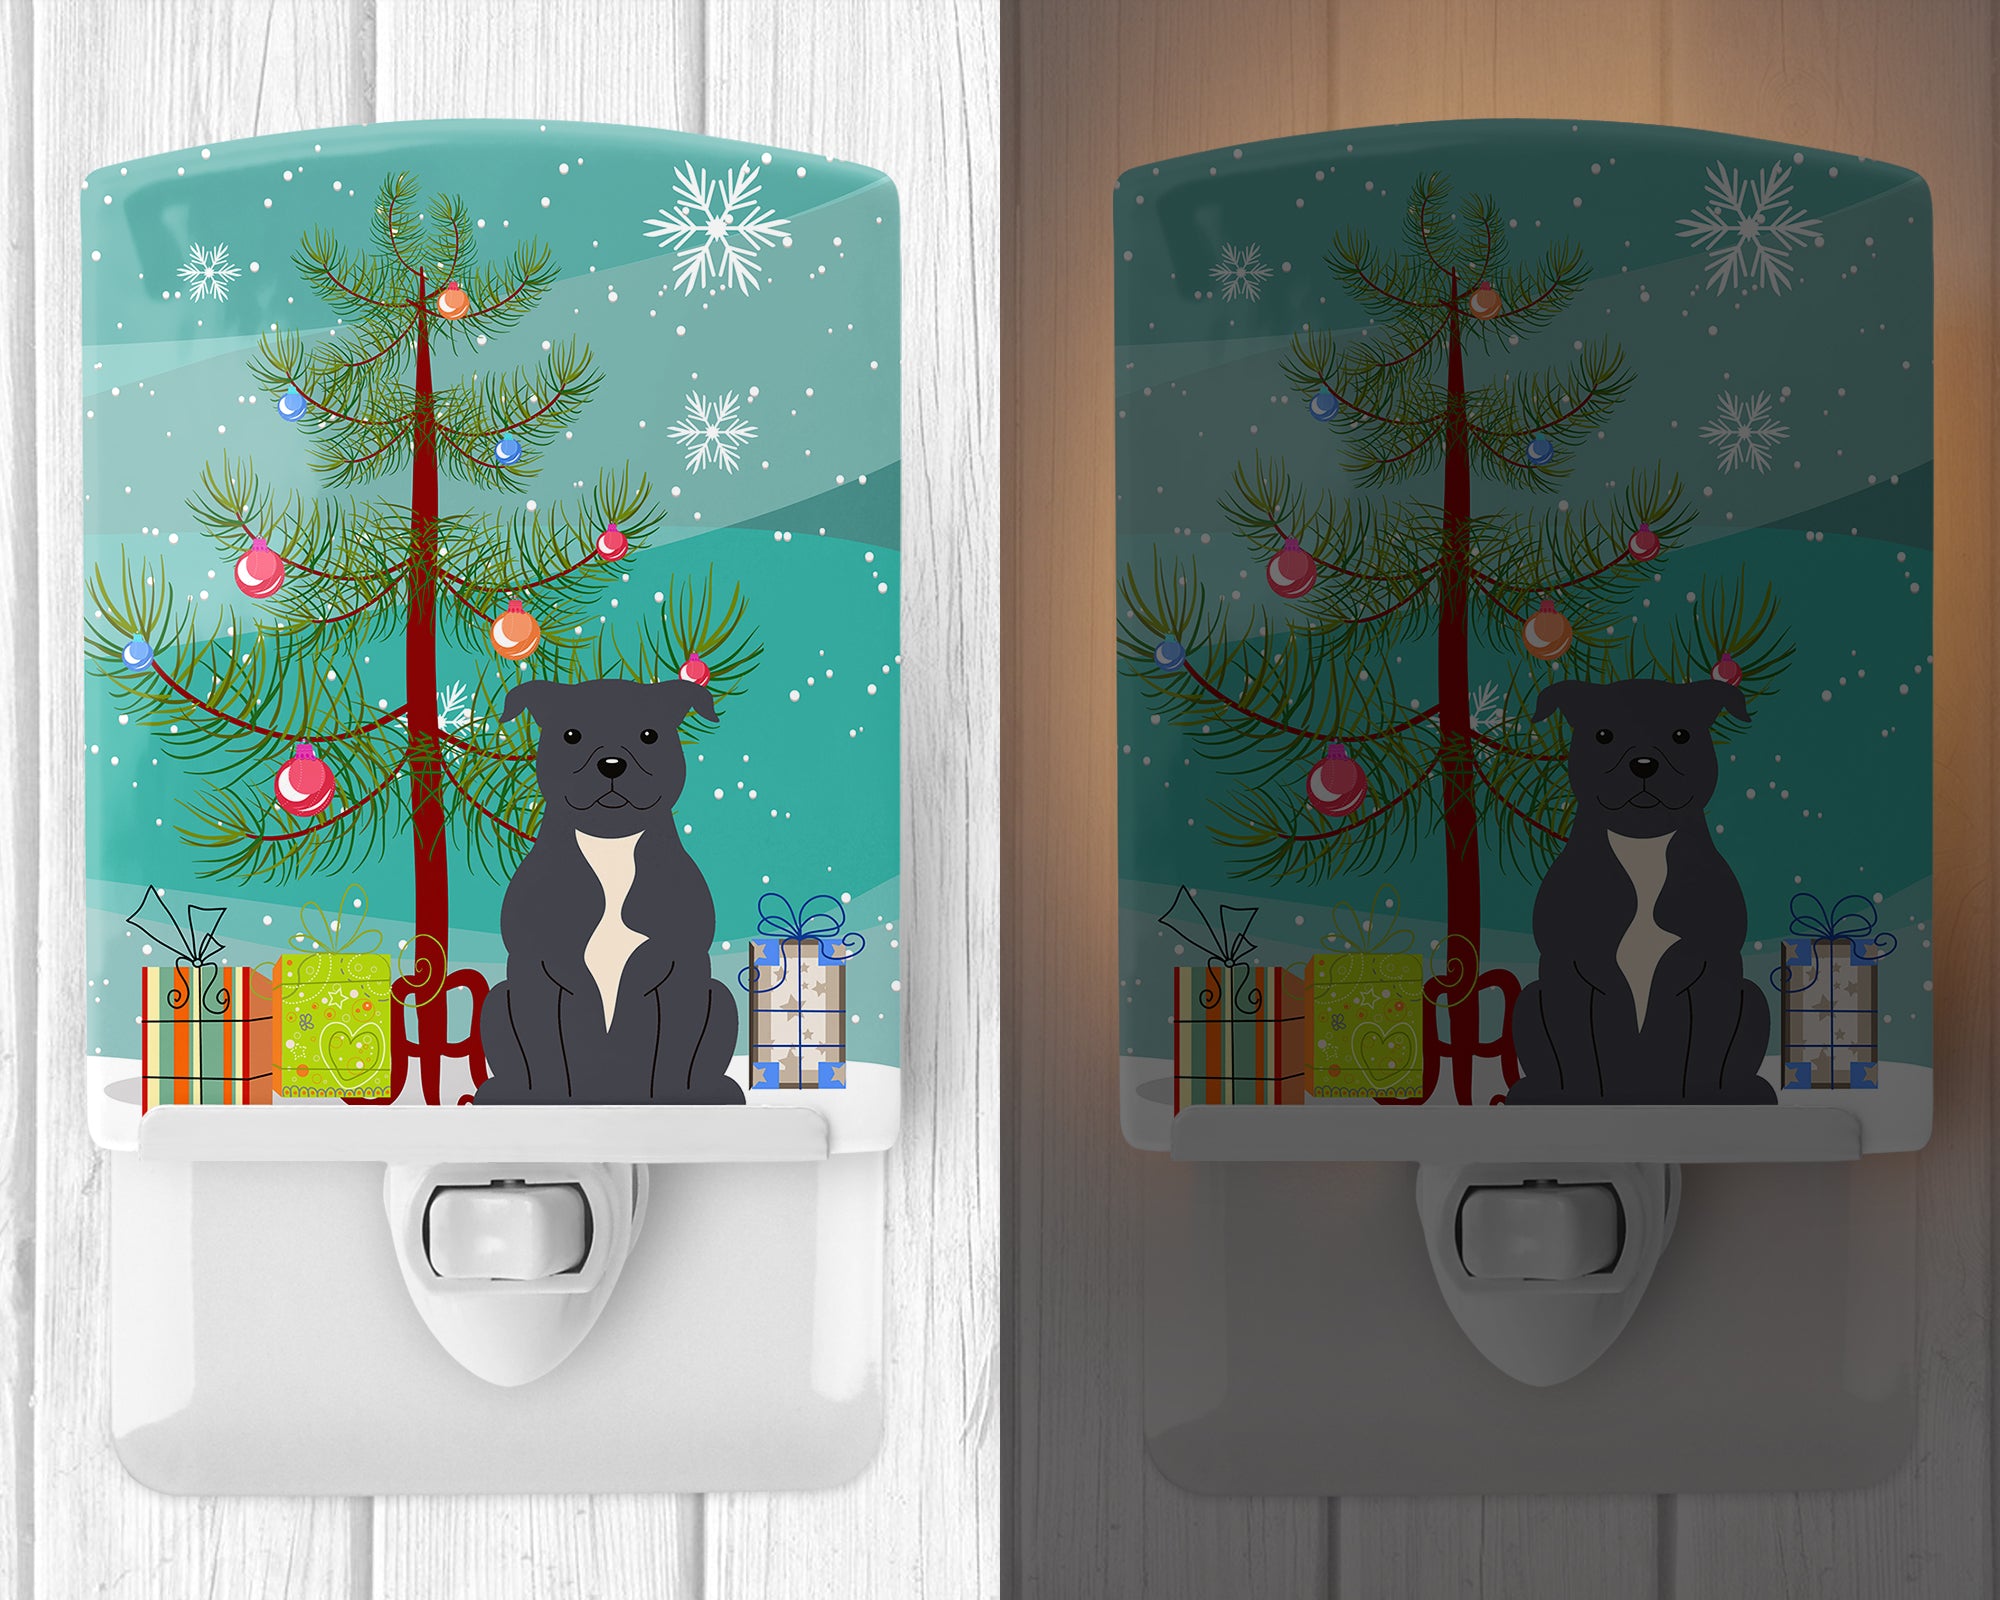 Merry Christmas Tree Staffordshire Bull Terrier Blue Ceramic Night Light BB4171CNL - the-store.com